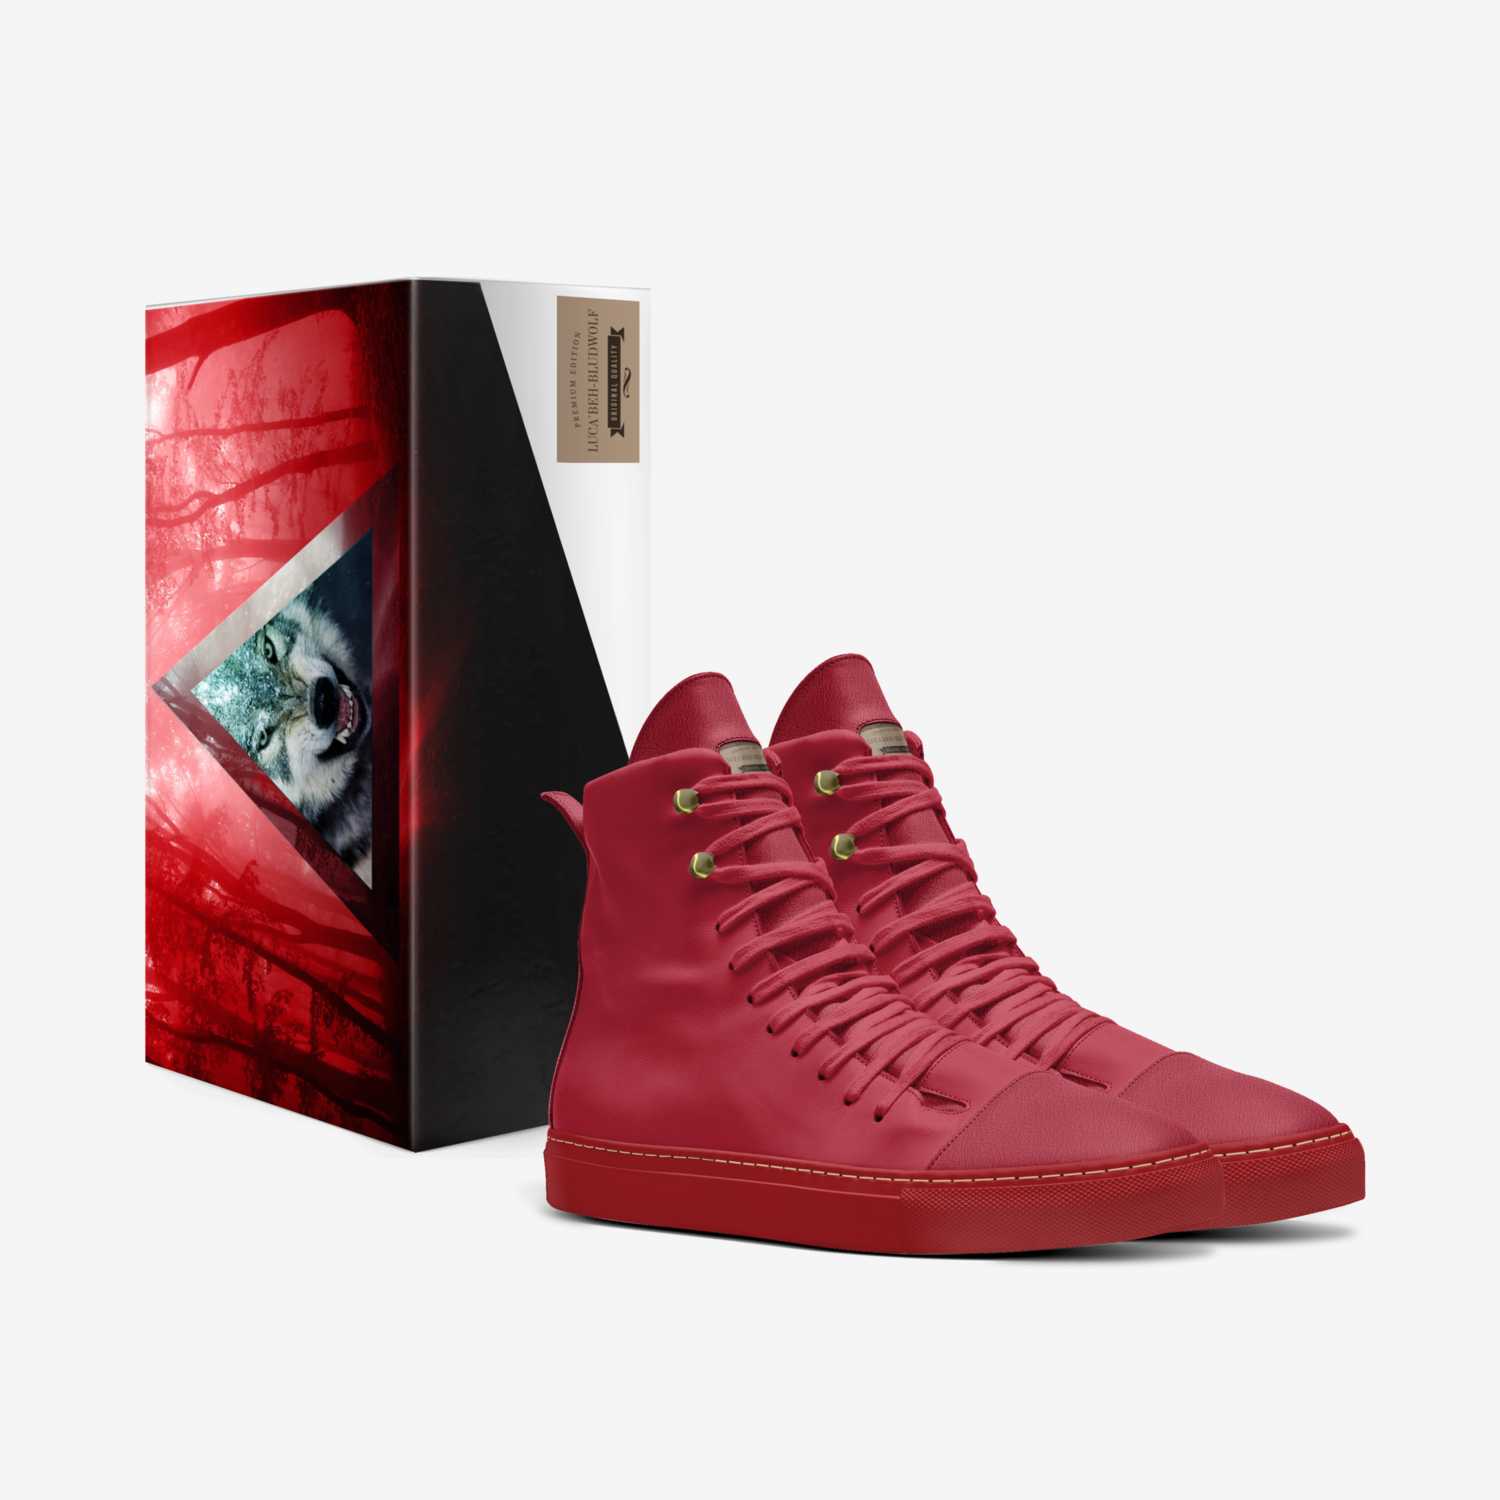 Luca'beh custom made in Italy shoes by Luke Streff | Box view